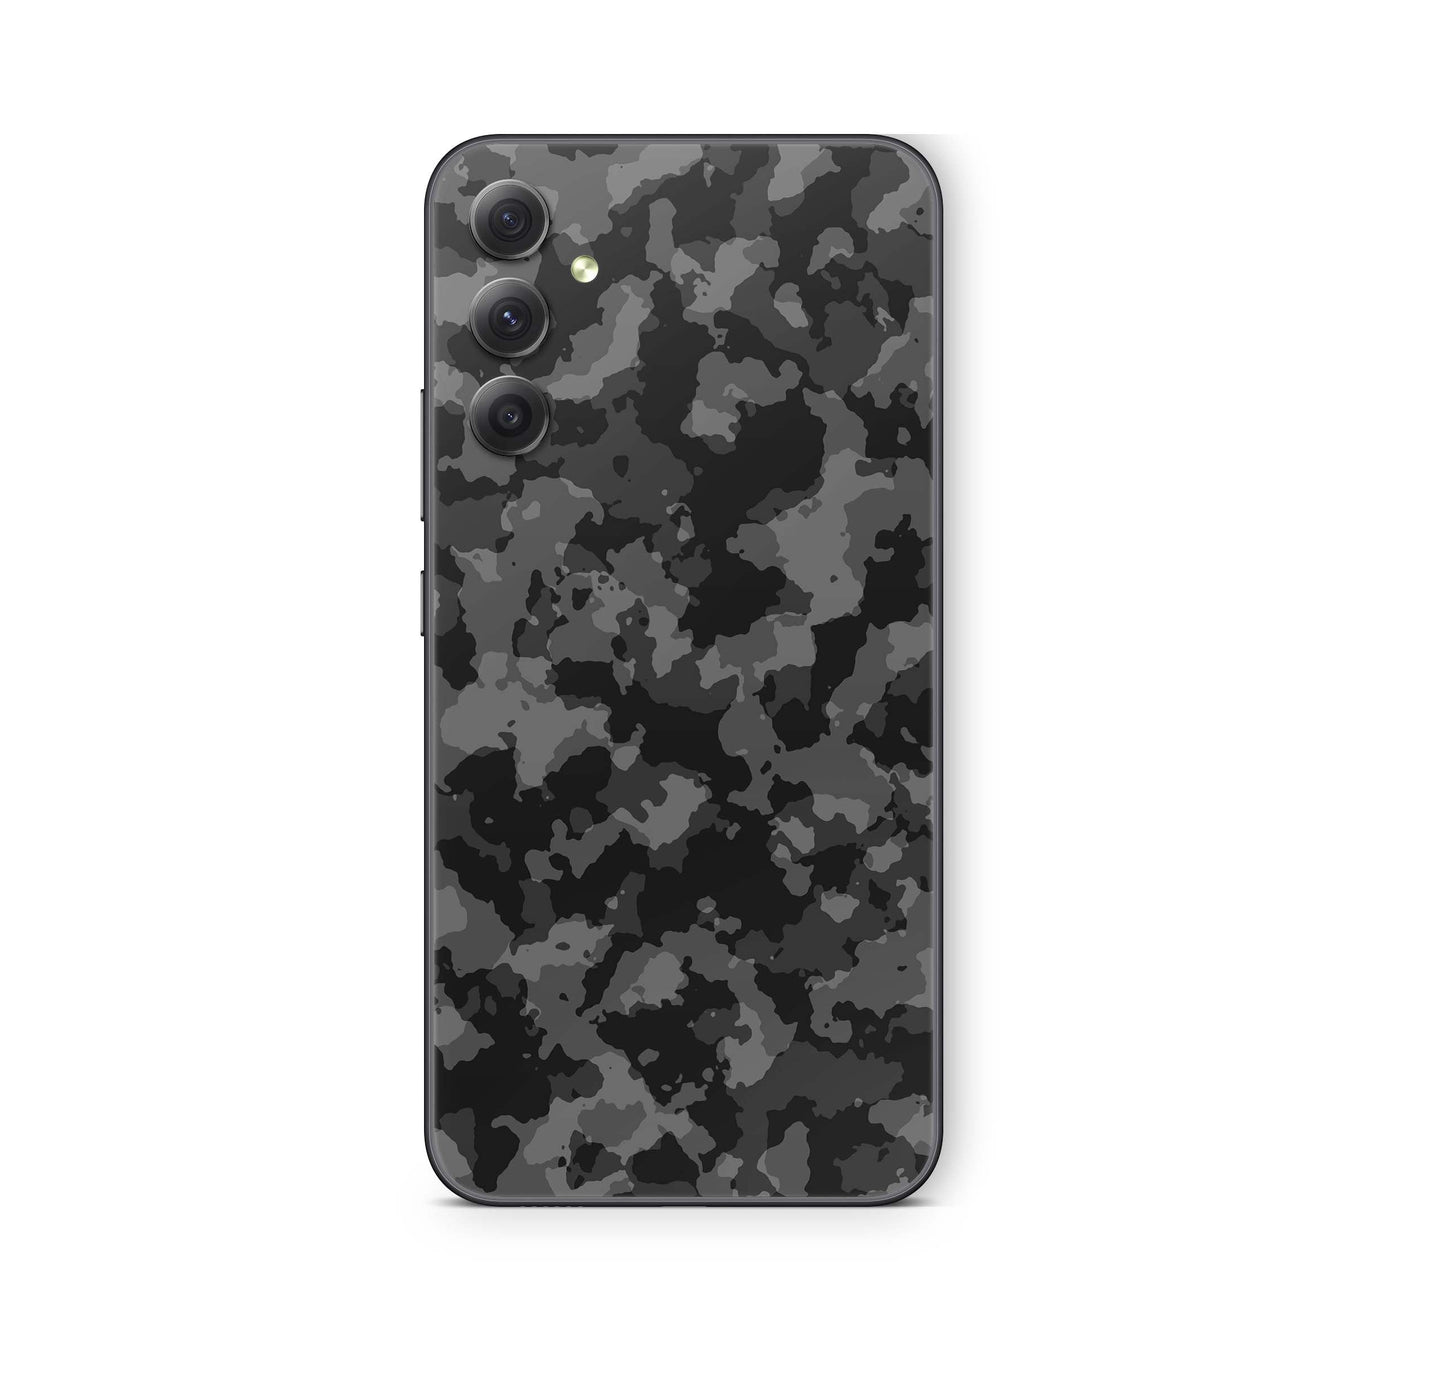 Samsung Galaxy A52 Skin Schutzfolie Aufkleber Skins Design Shadow Camo grau Elektronik-Sticker & -Aufkleber skins4u   